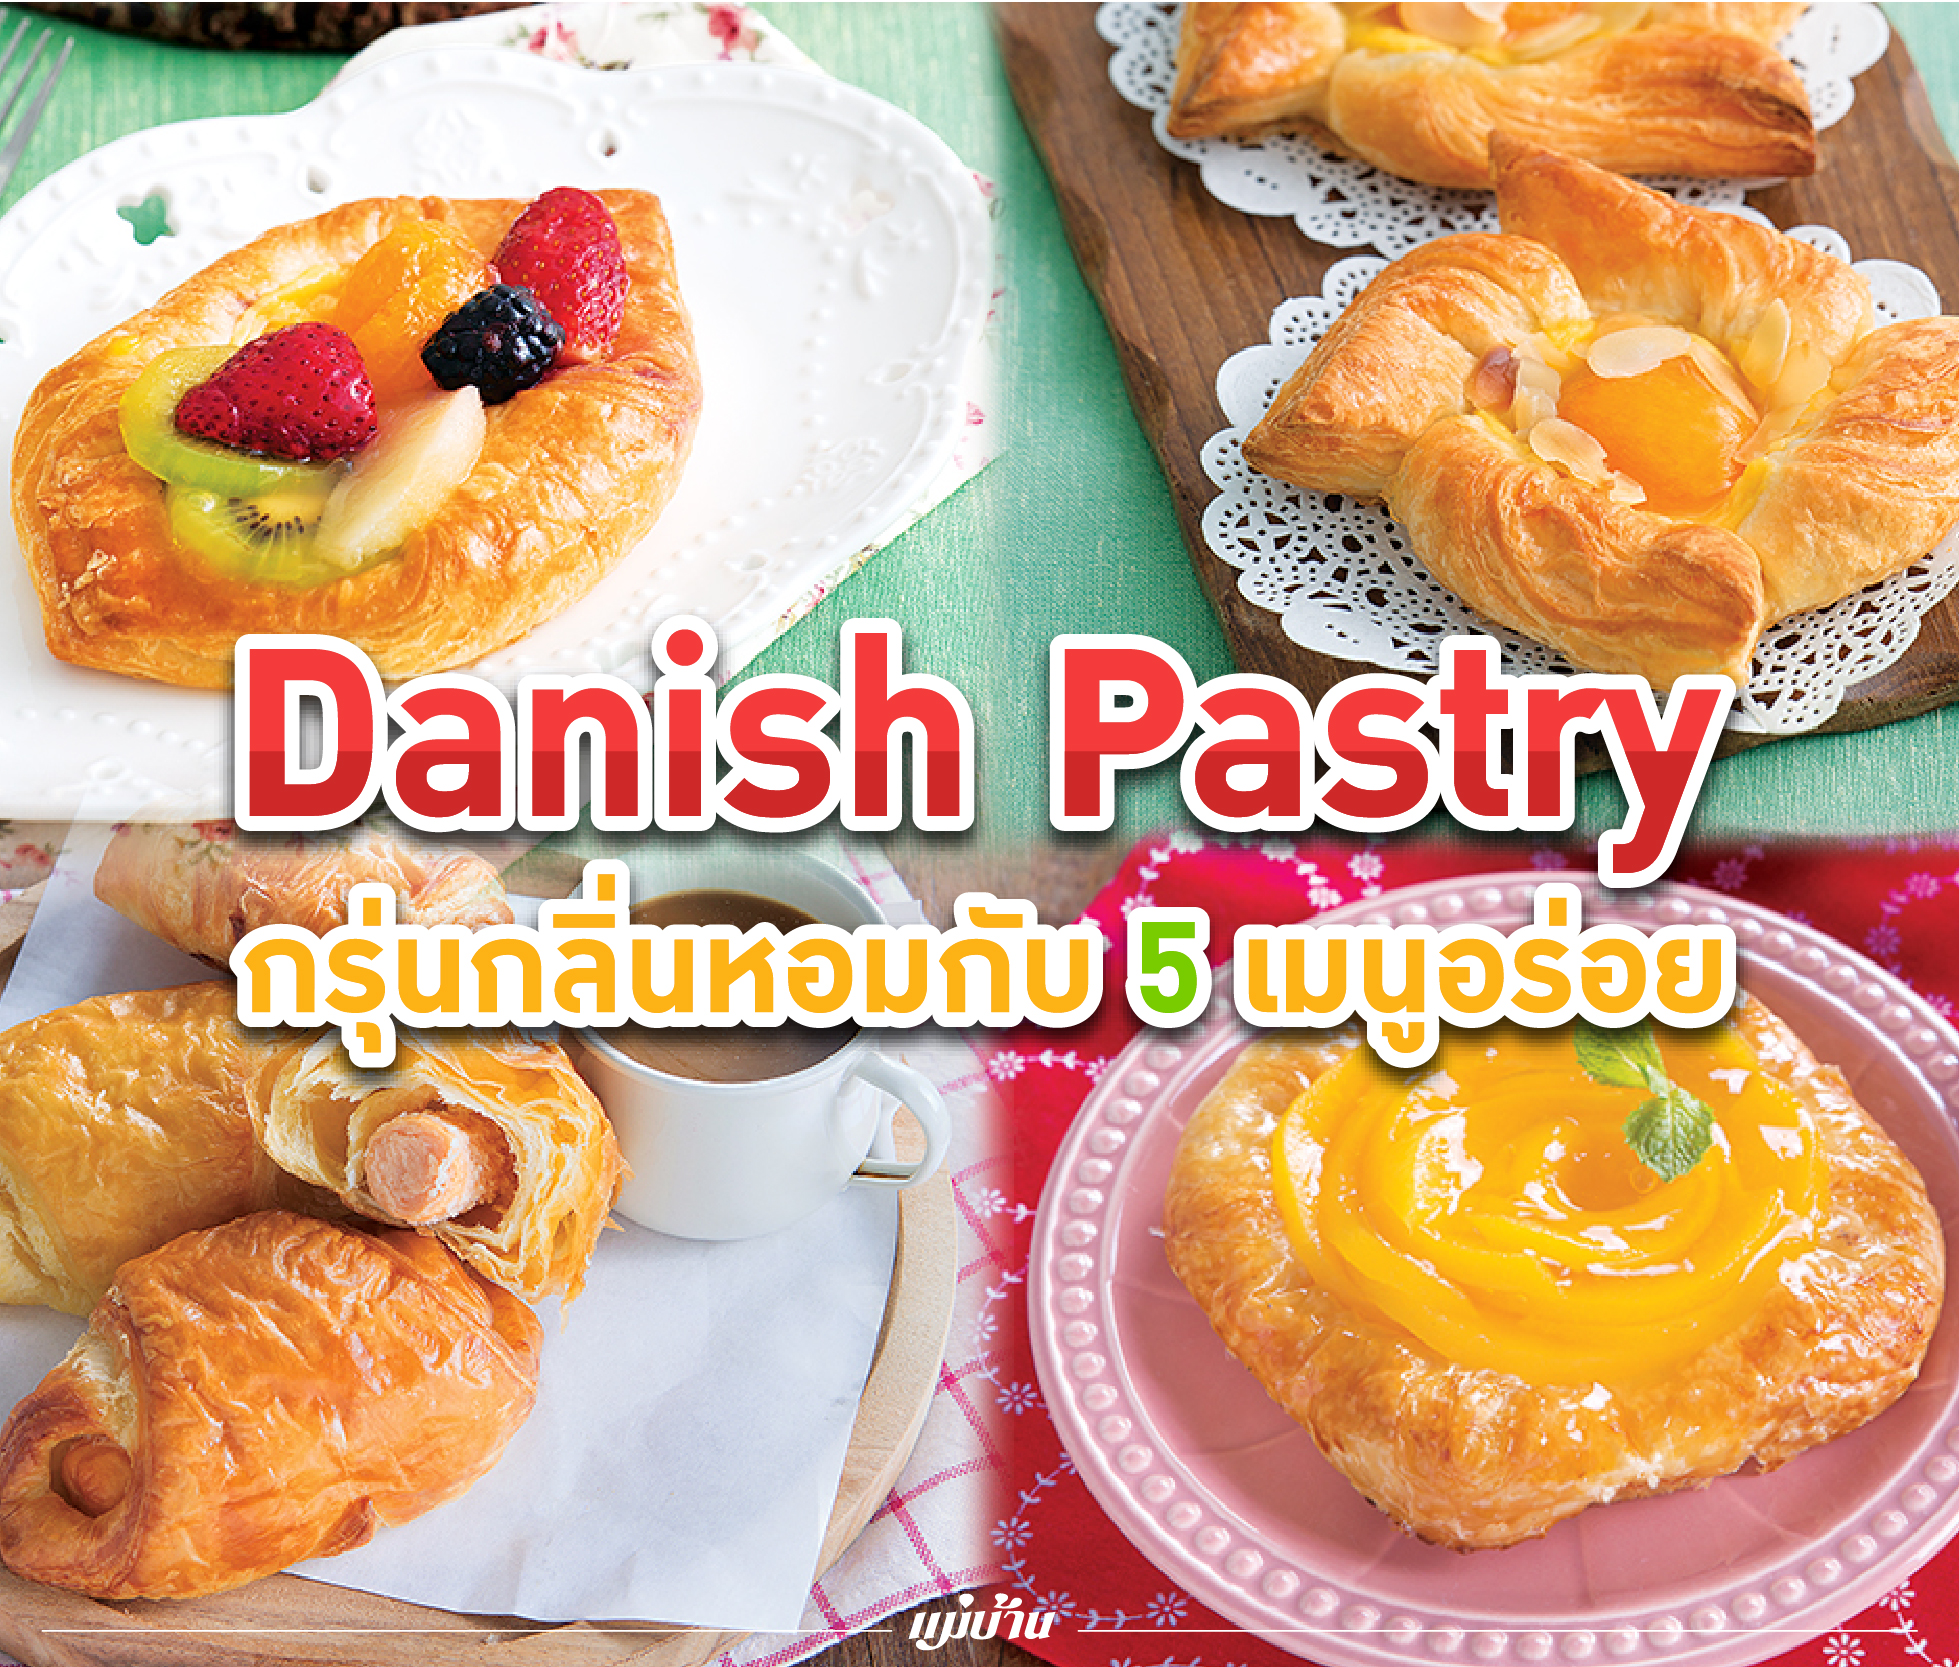 Danish Pastry กรุ่นกลิ่นหอมกับ 5 เมนูอร่อย  สำนักพิมพ์แม่บ้าน